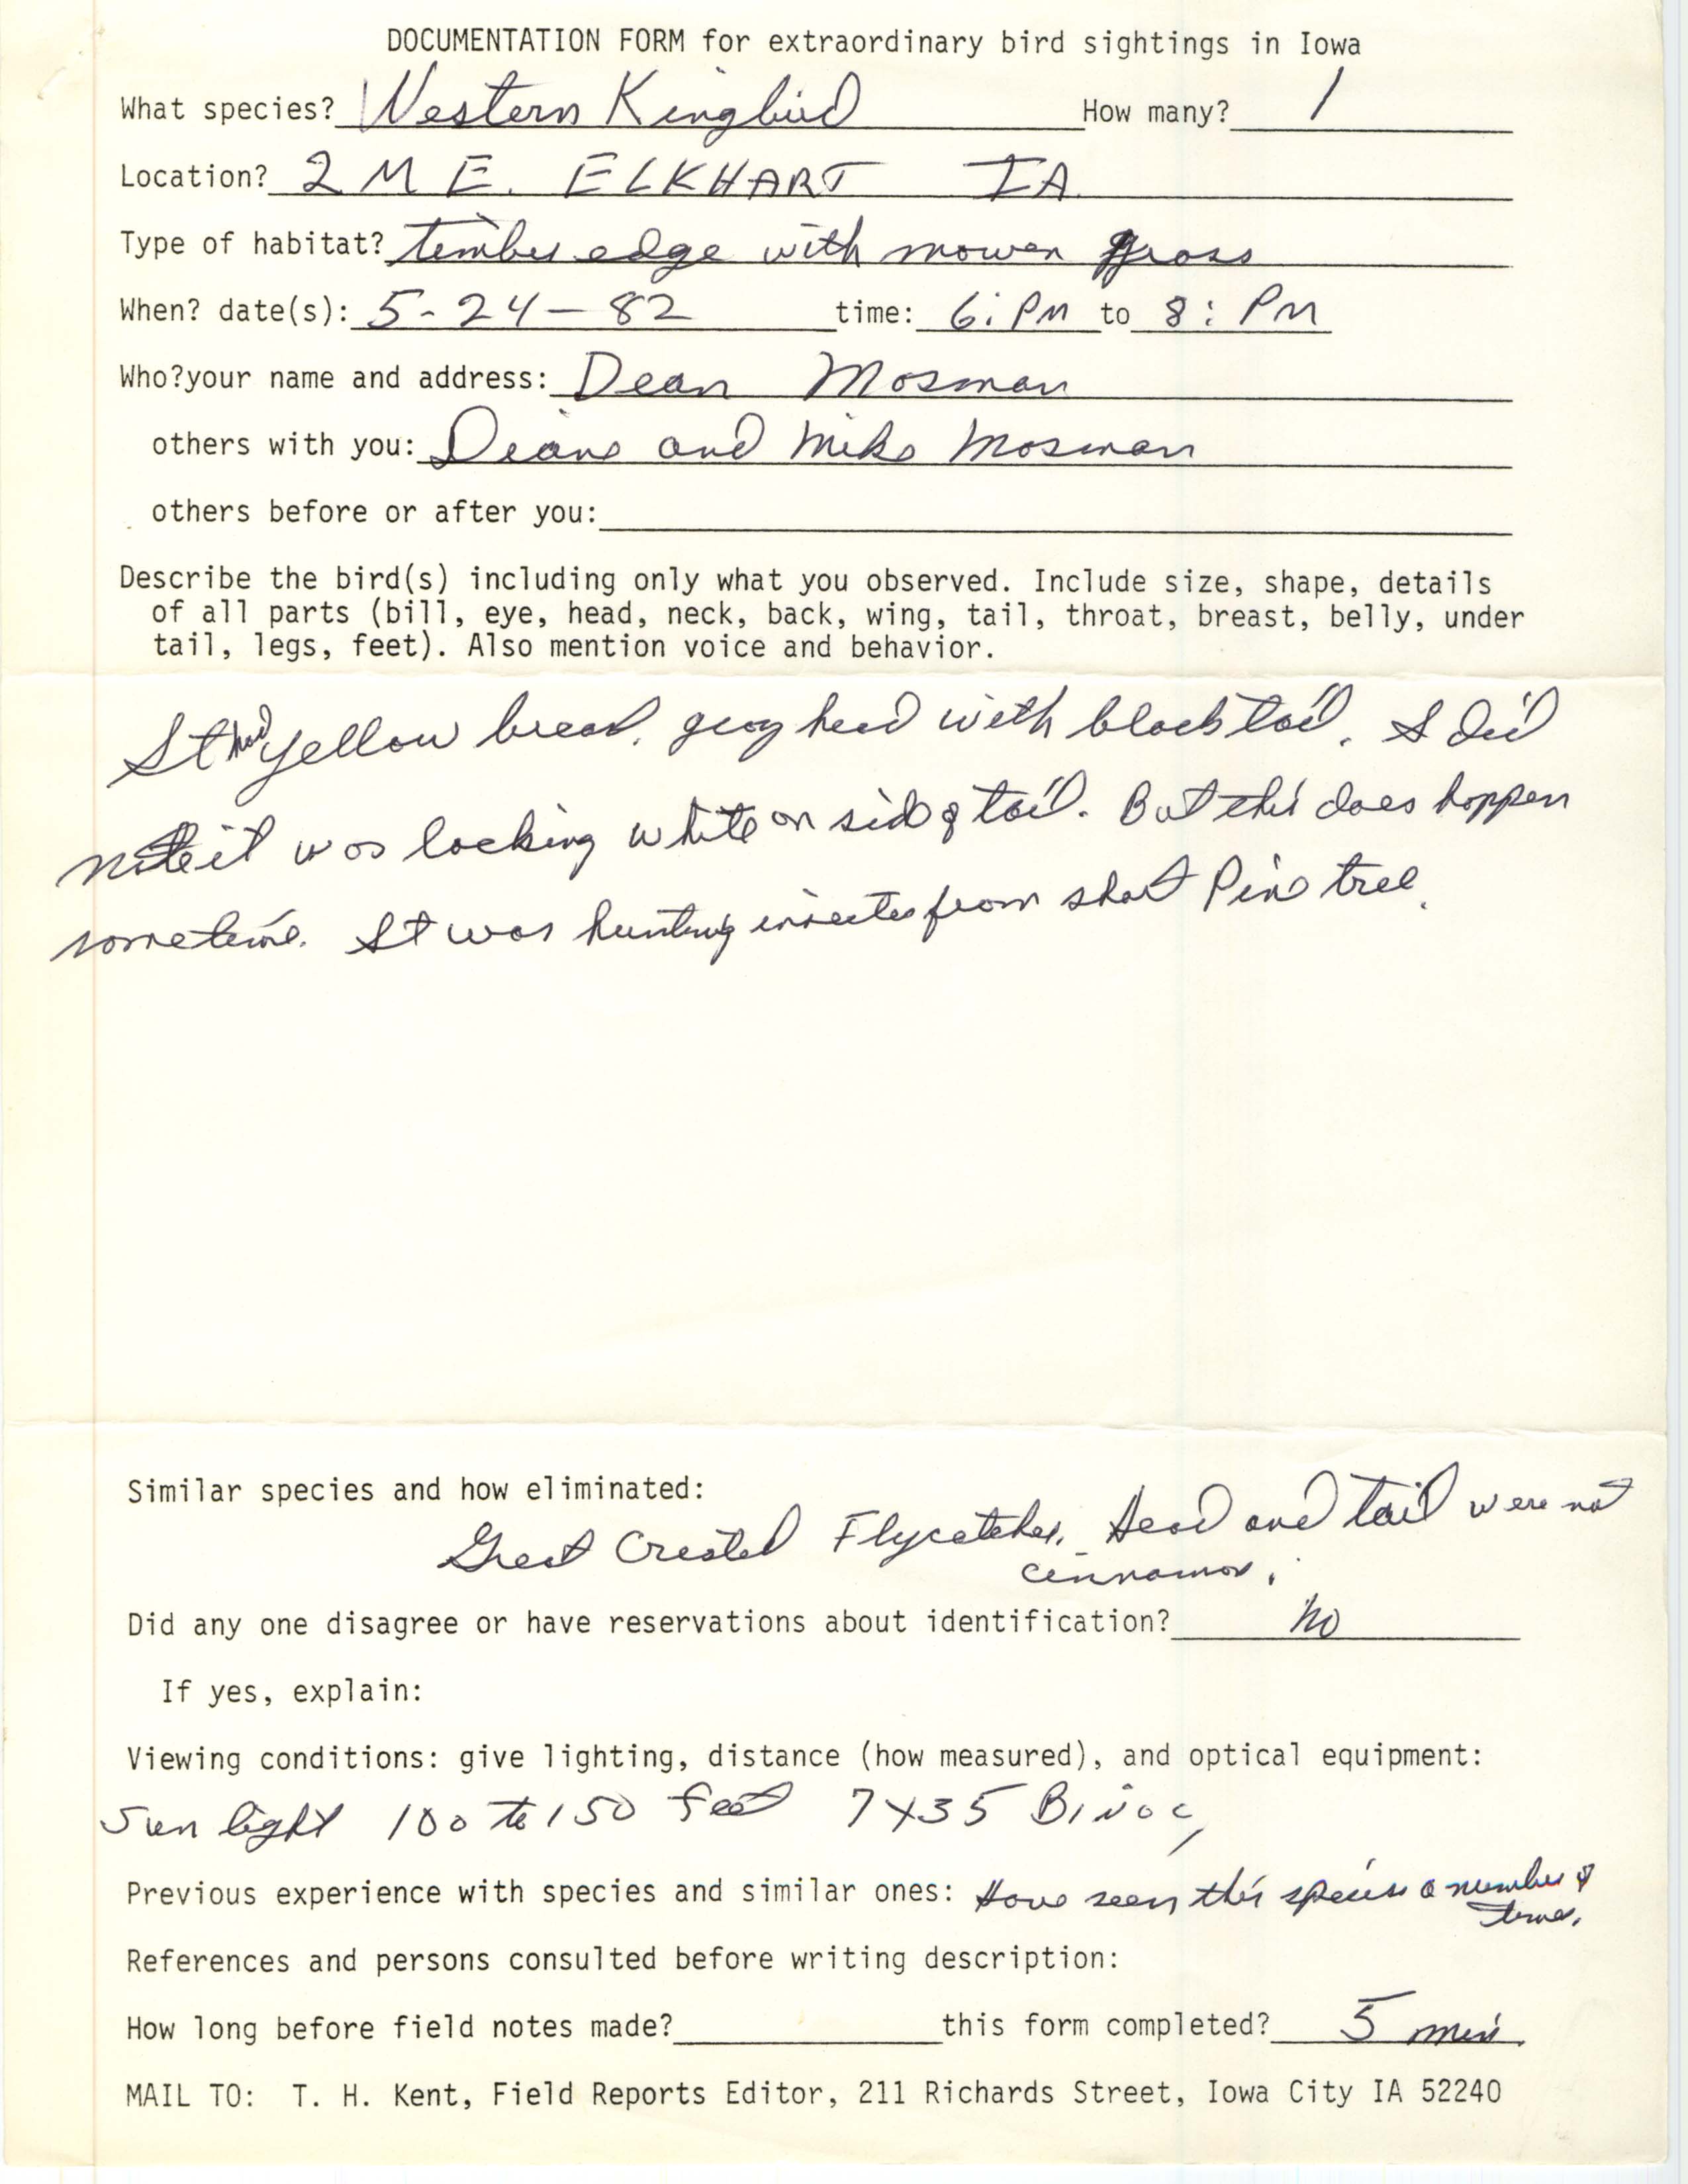 Rare bird documentation form for Western Kingbird east of Elkhart in 1982